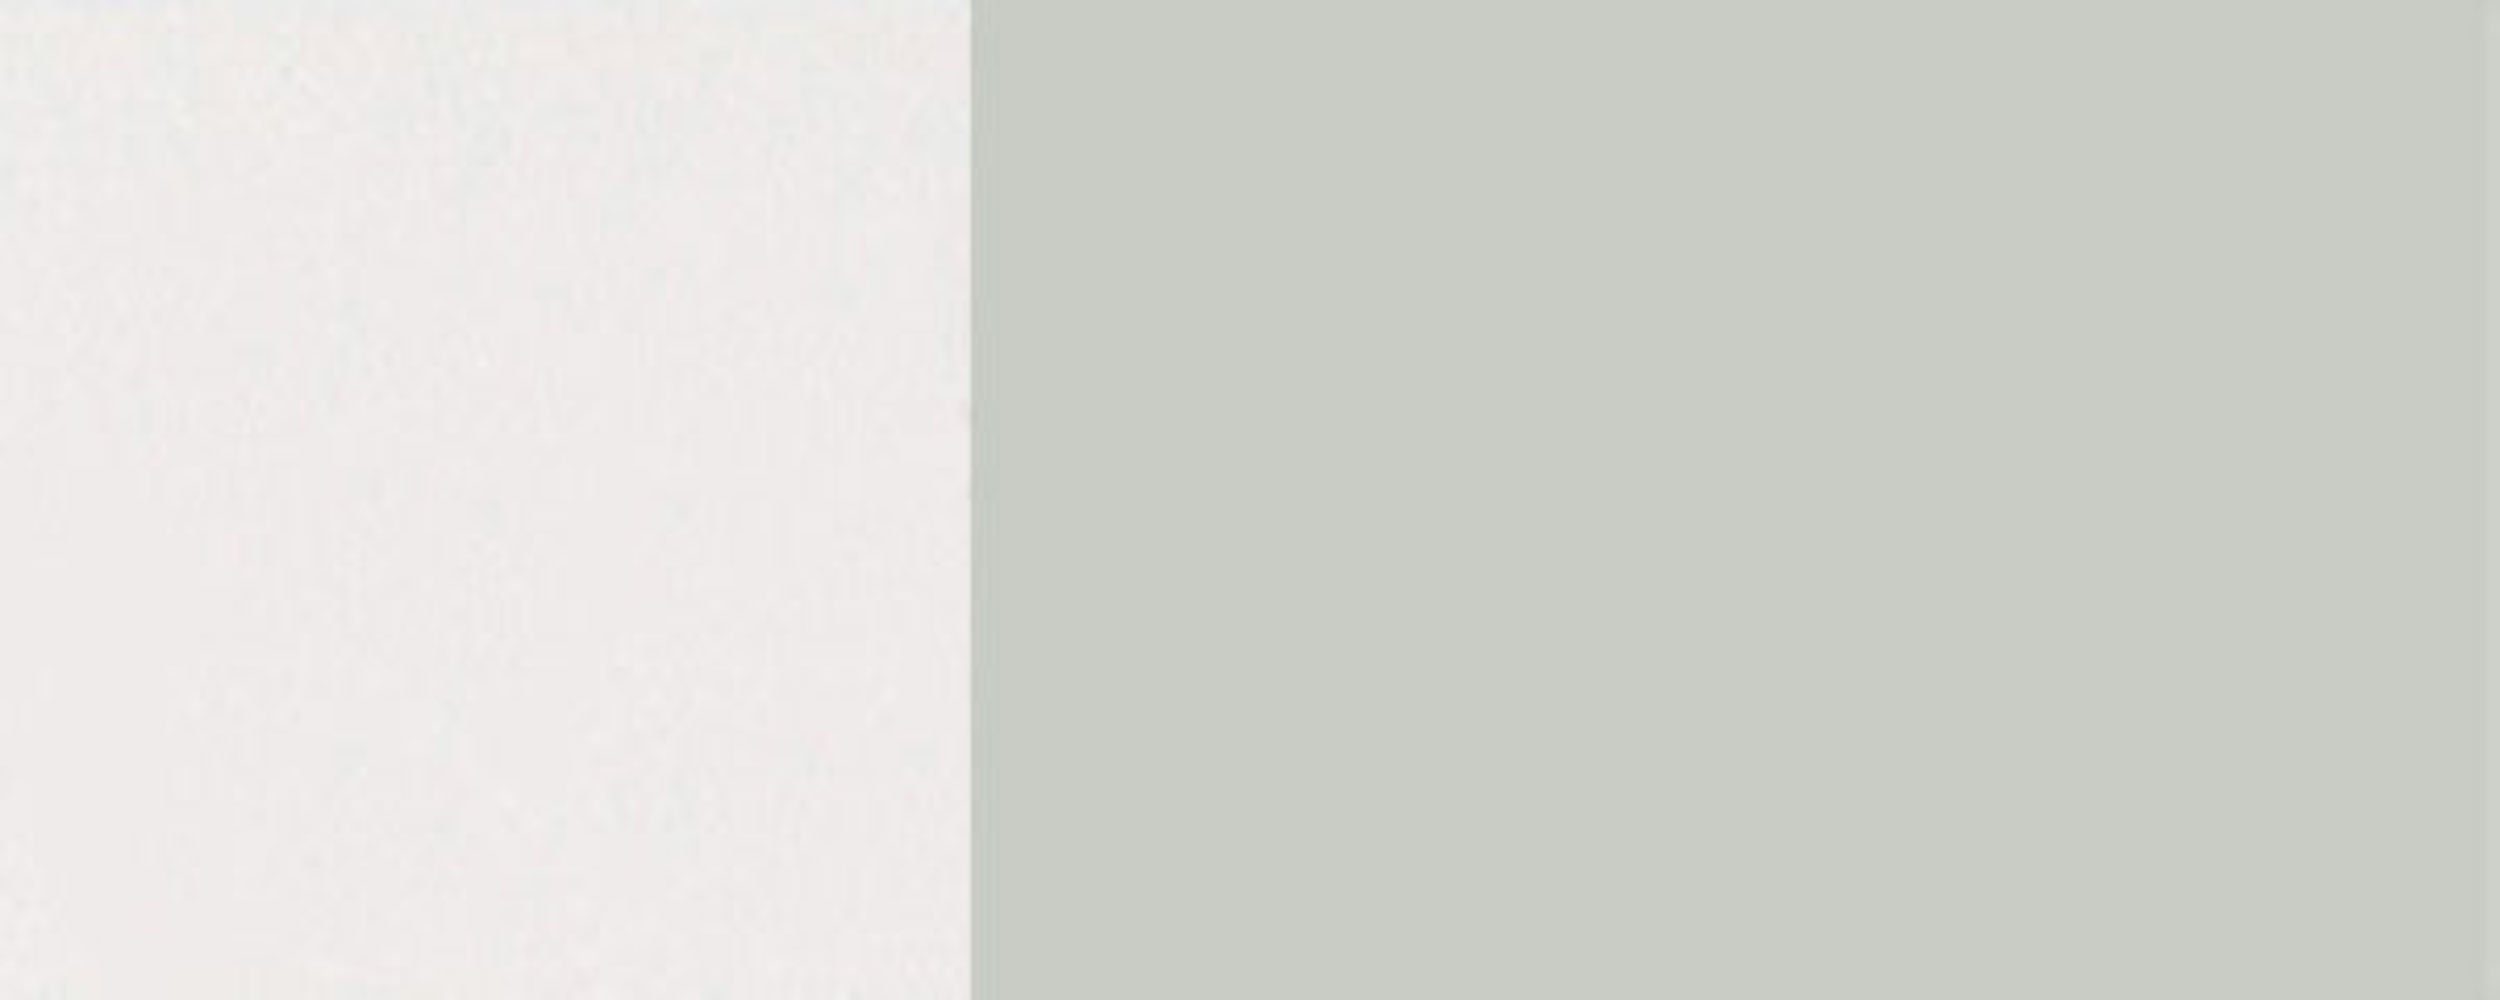 Feldmann-Wohnen Backofenumbauschrank Florence papyrusweiß Ausführung & Front-, RAL wählbar Hochglanz 60cm (Florence) Schubladen Korpusfarbe grifflos 2 9018